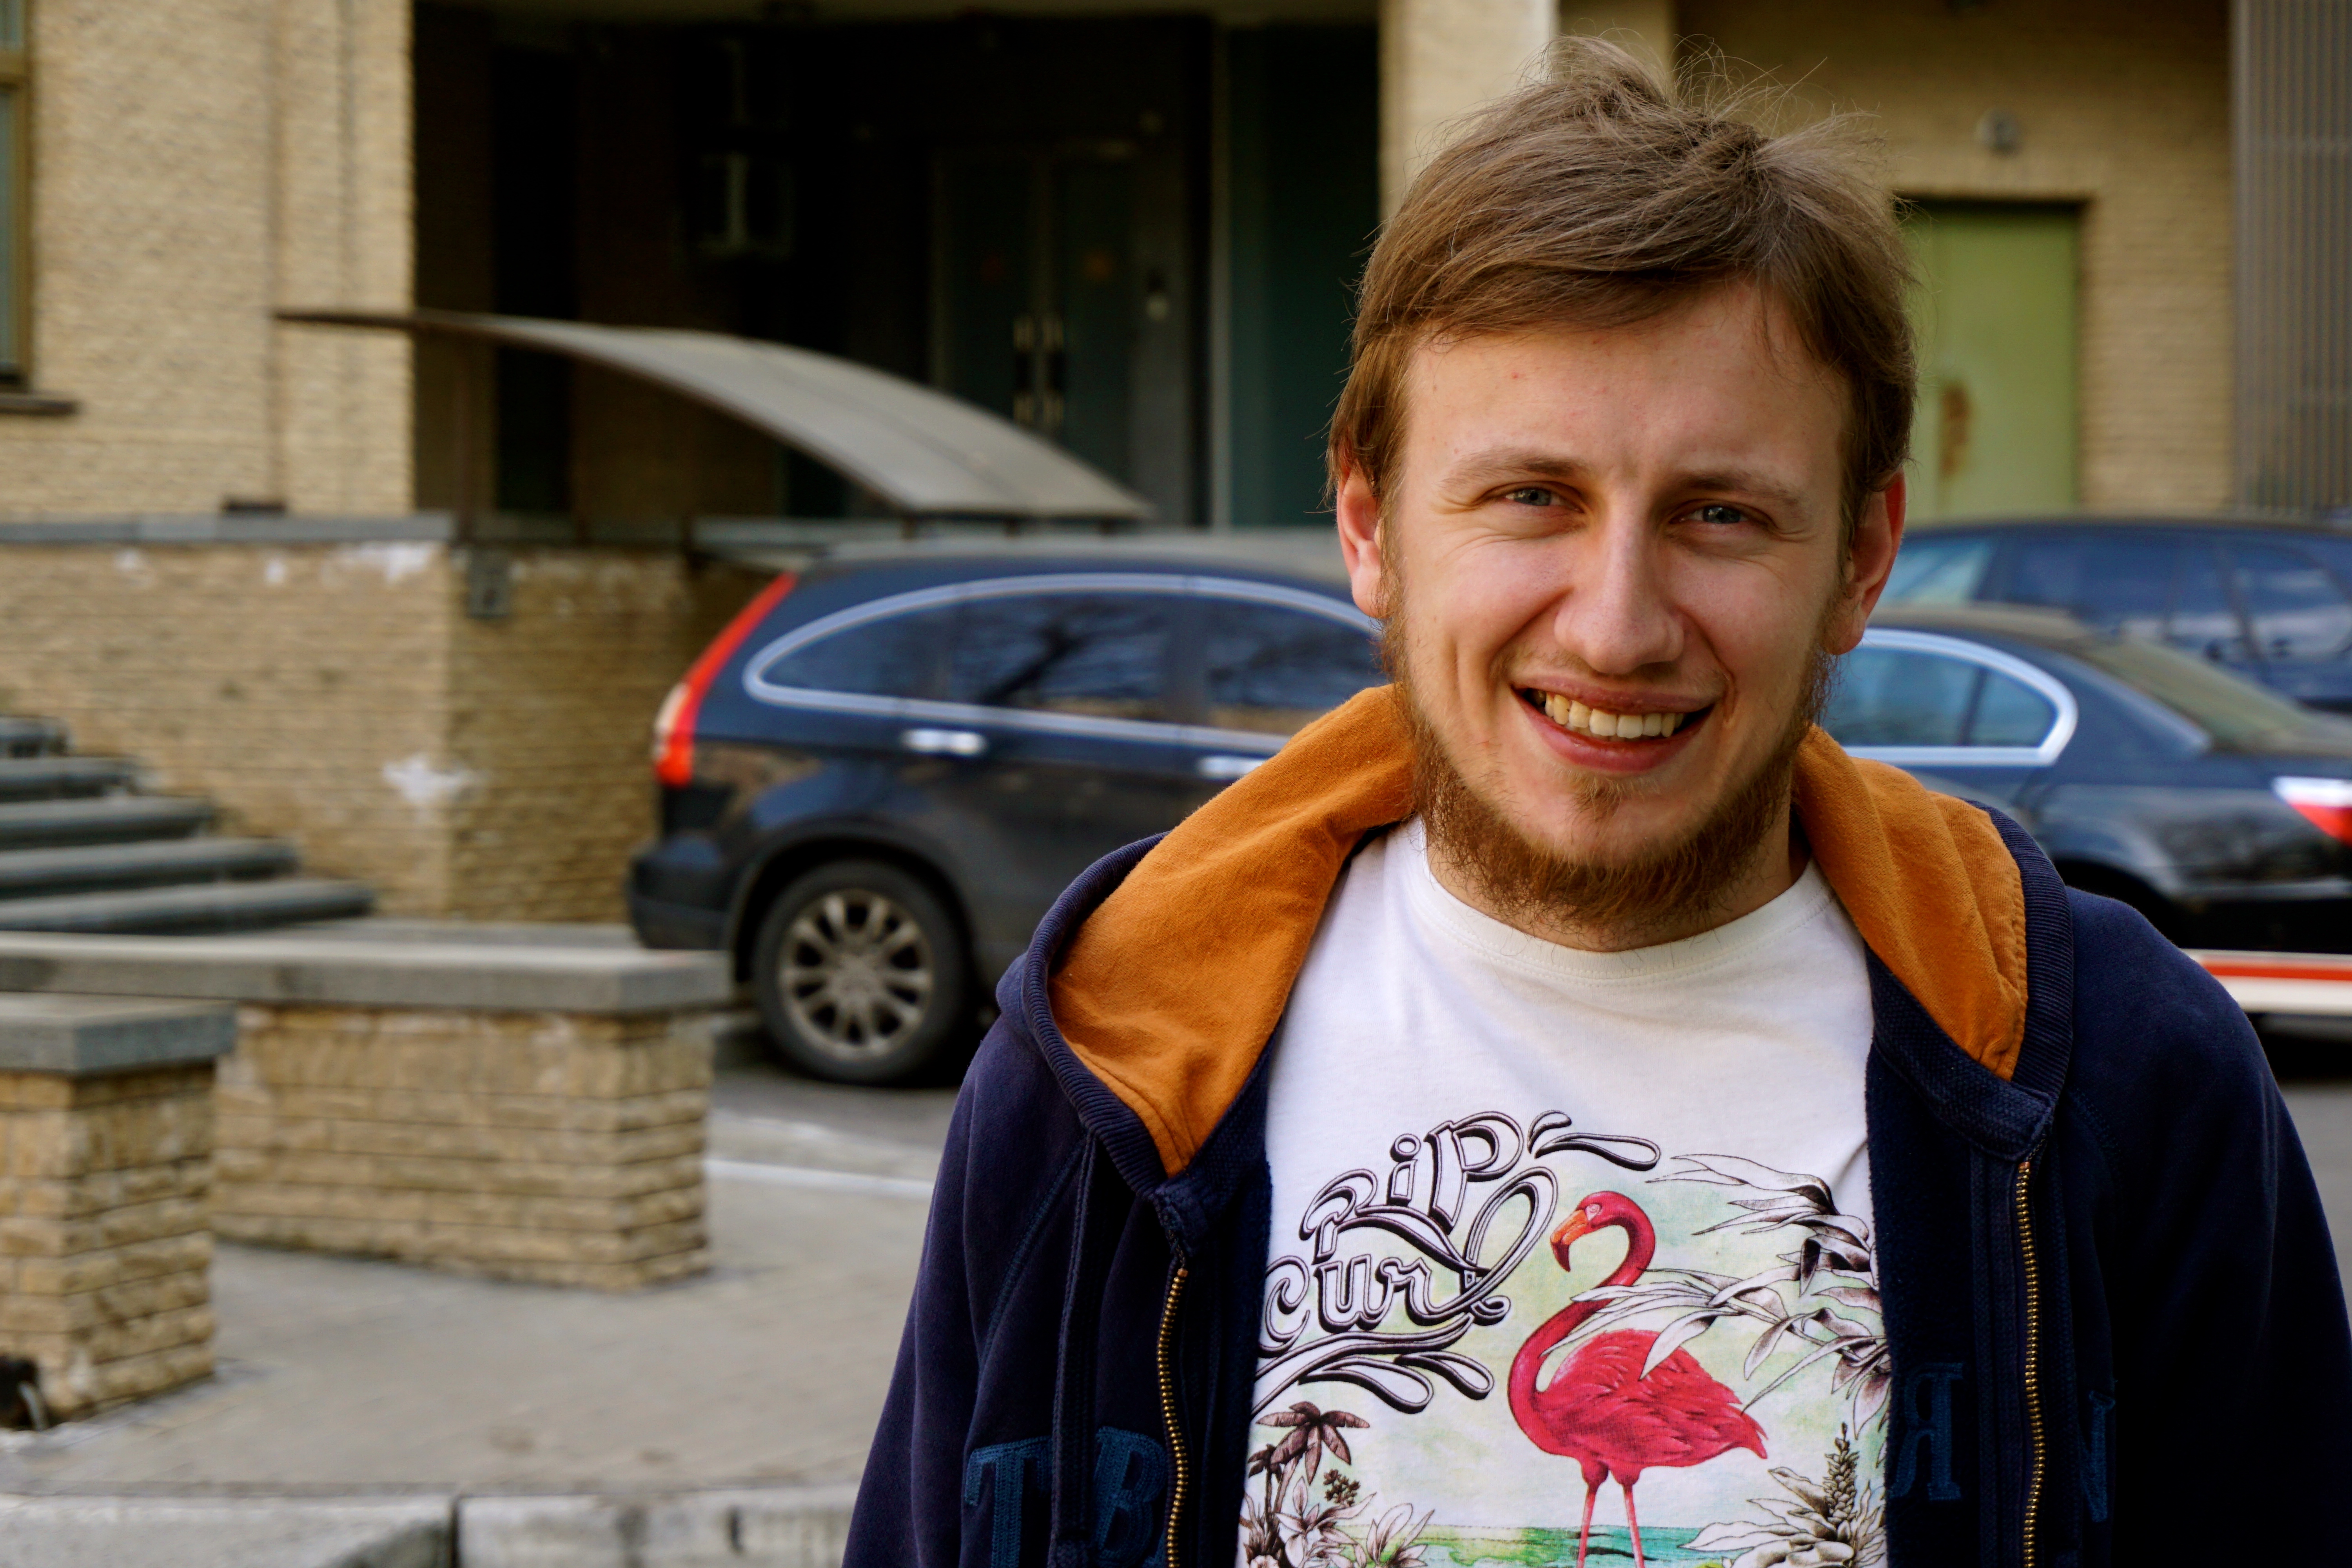 Bogdan Logvynenko, 27, a Ukrainian journalist and political activist says the Ukrainian revolution was a success. (Photos: Nolan Peterson/The Daily Signal)